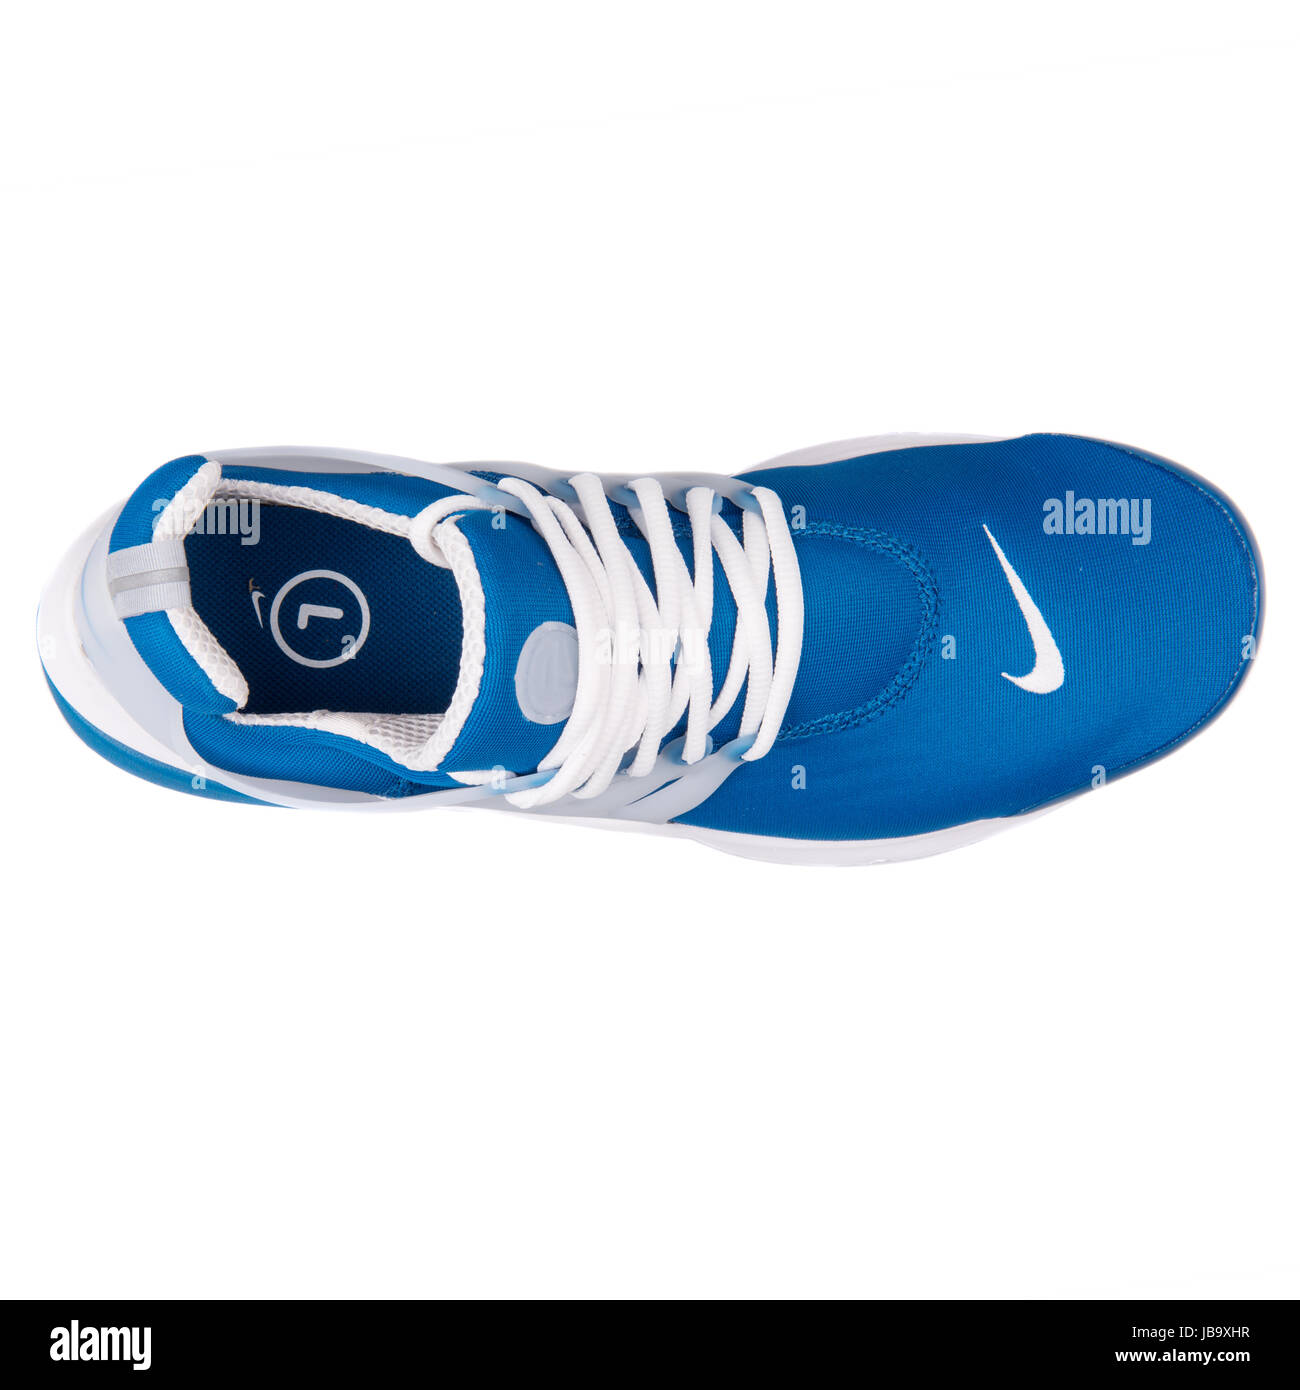 Nike Air Presto bleu et blanc QS Men's chaussures running - 789870-413  Photo Stock - Alamy